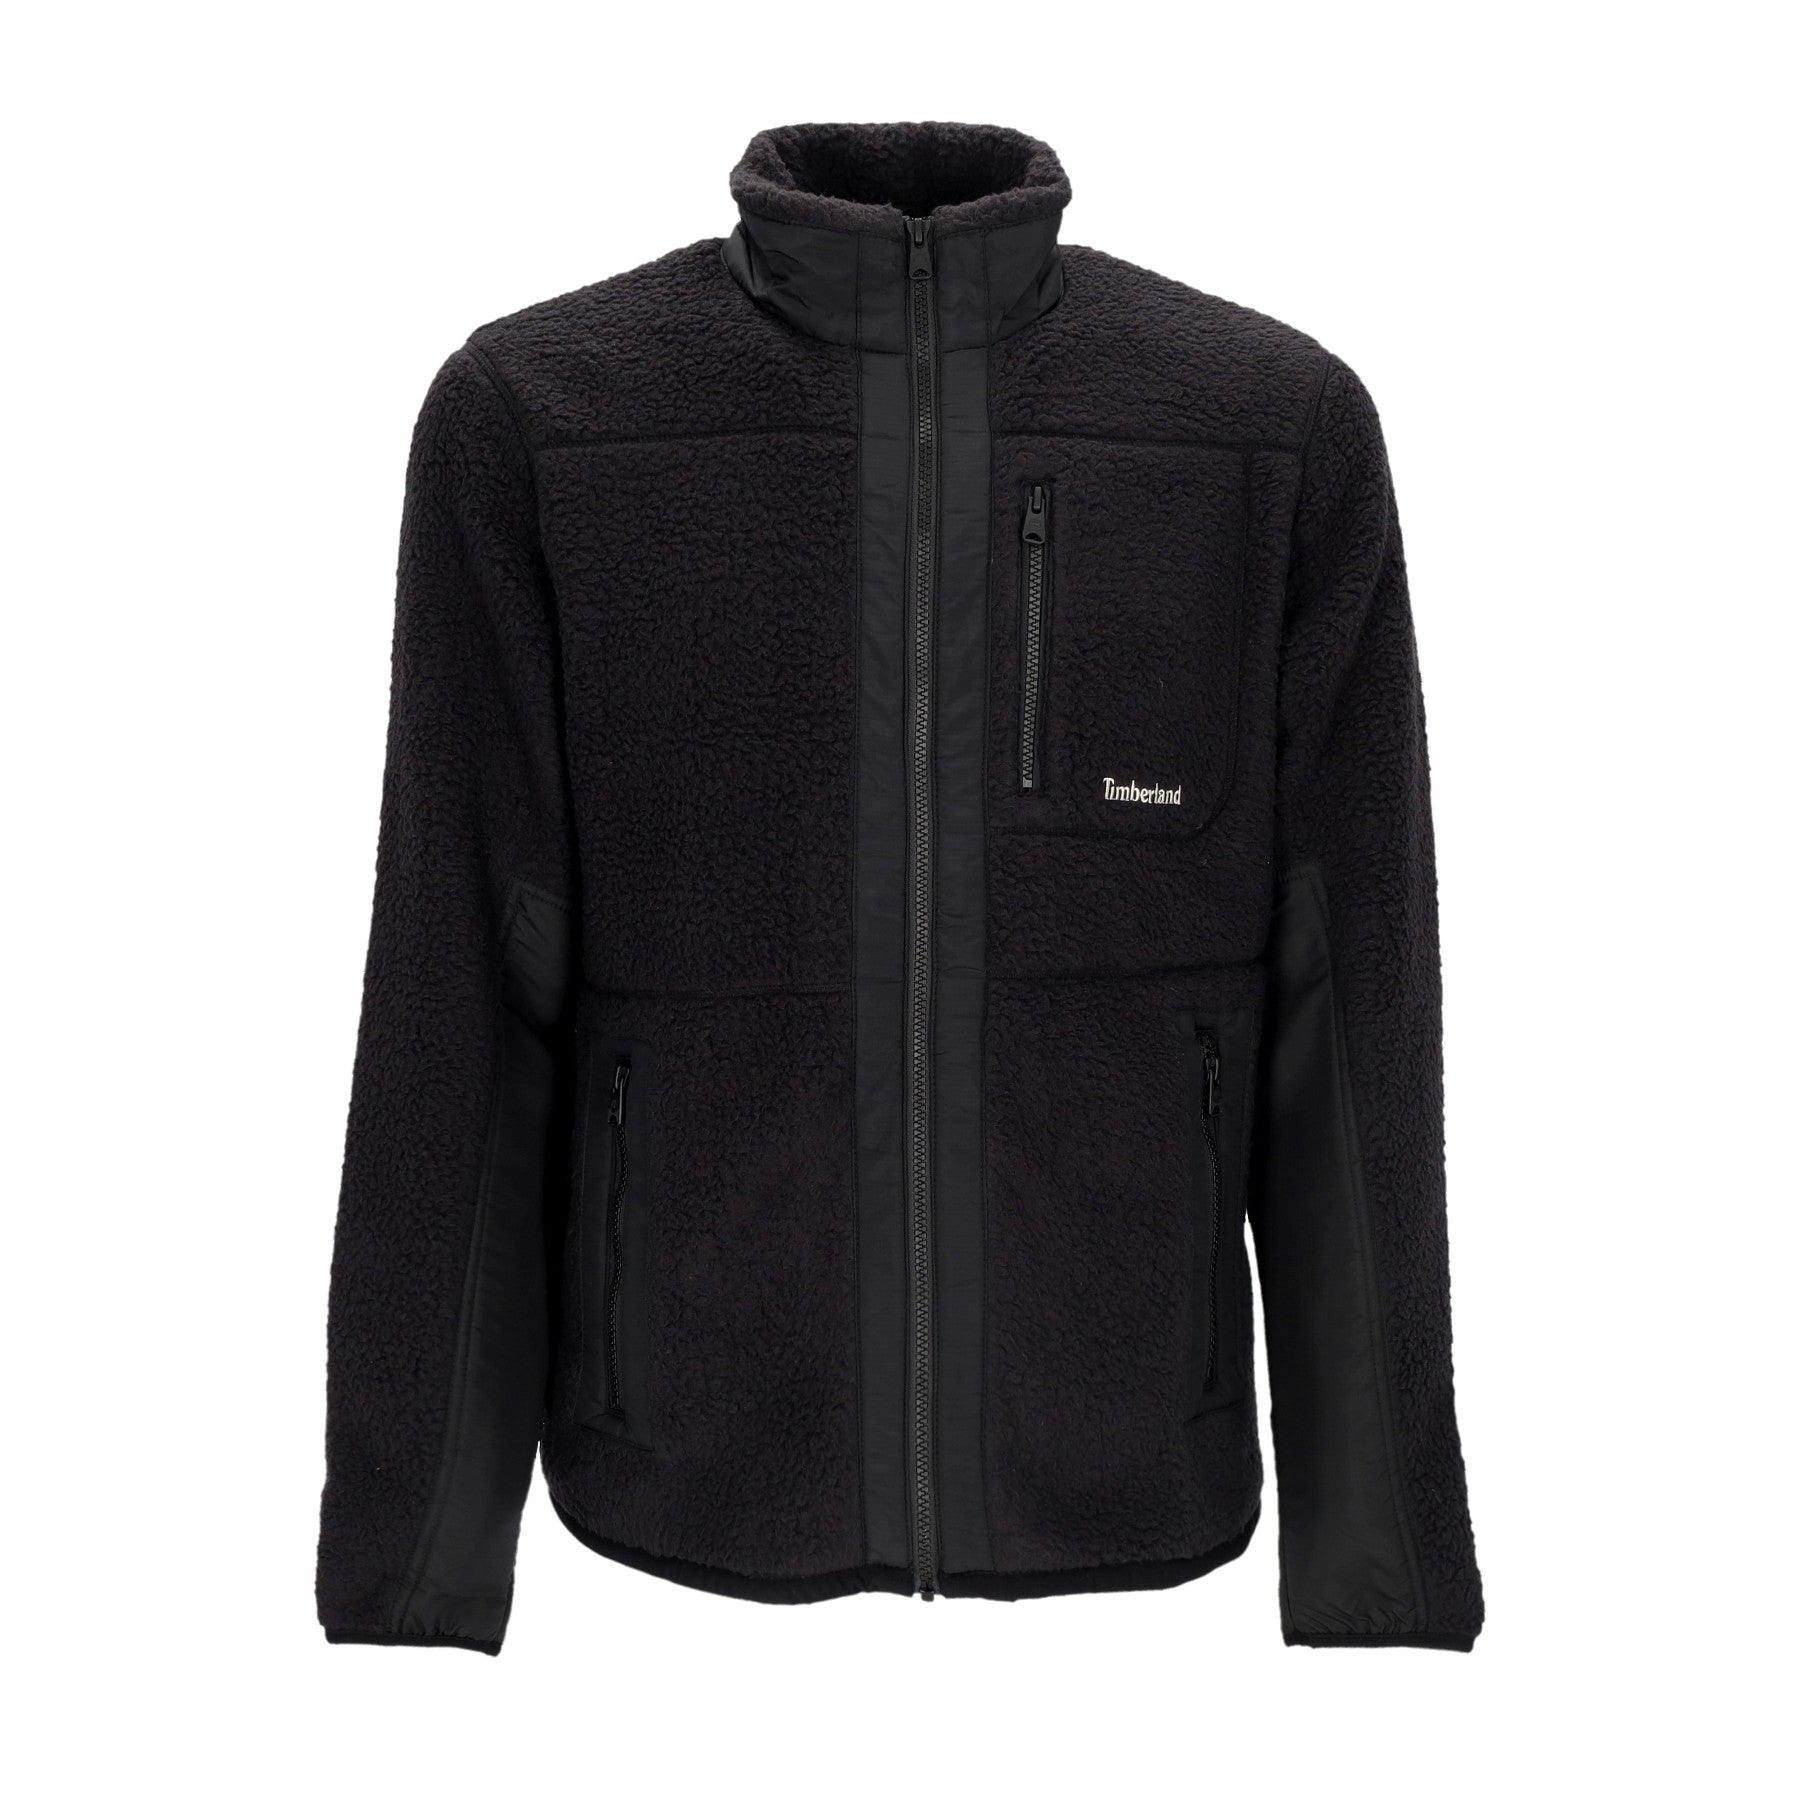 Timberland, Giubbotto Pile Uomo Mm Sherpa Fleece Jacket, Black